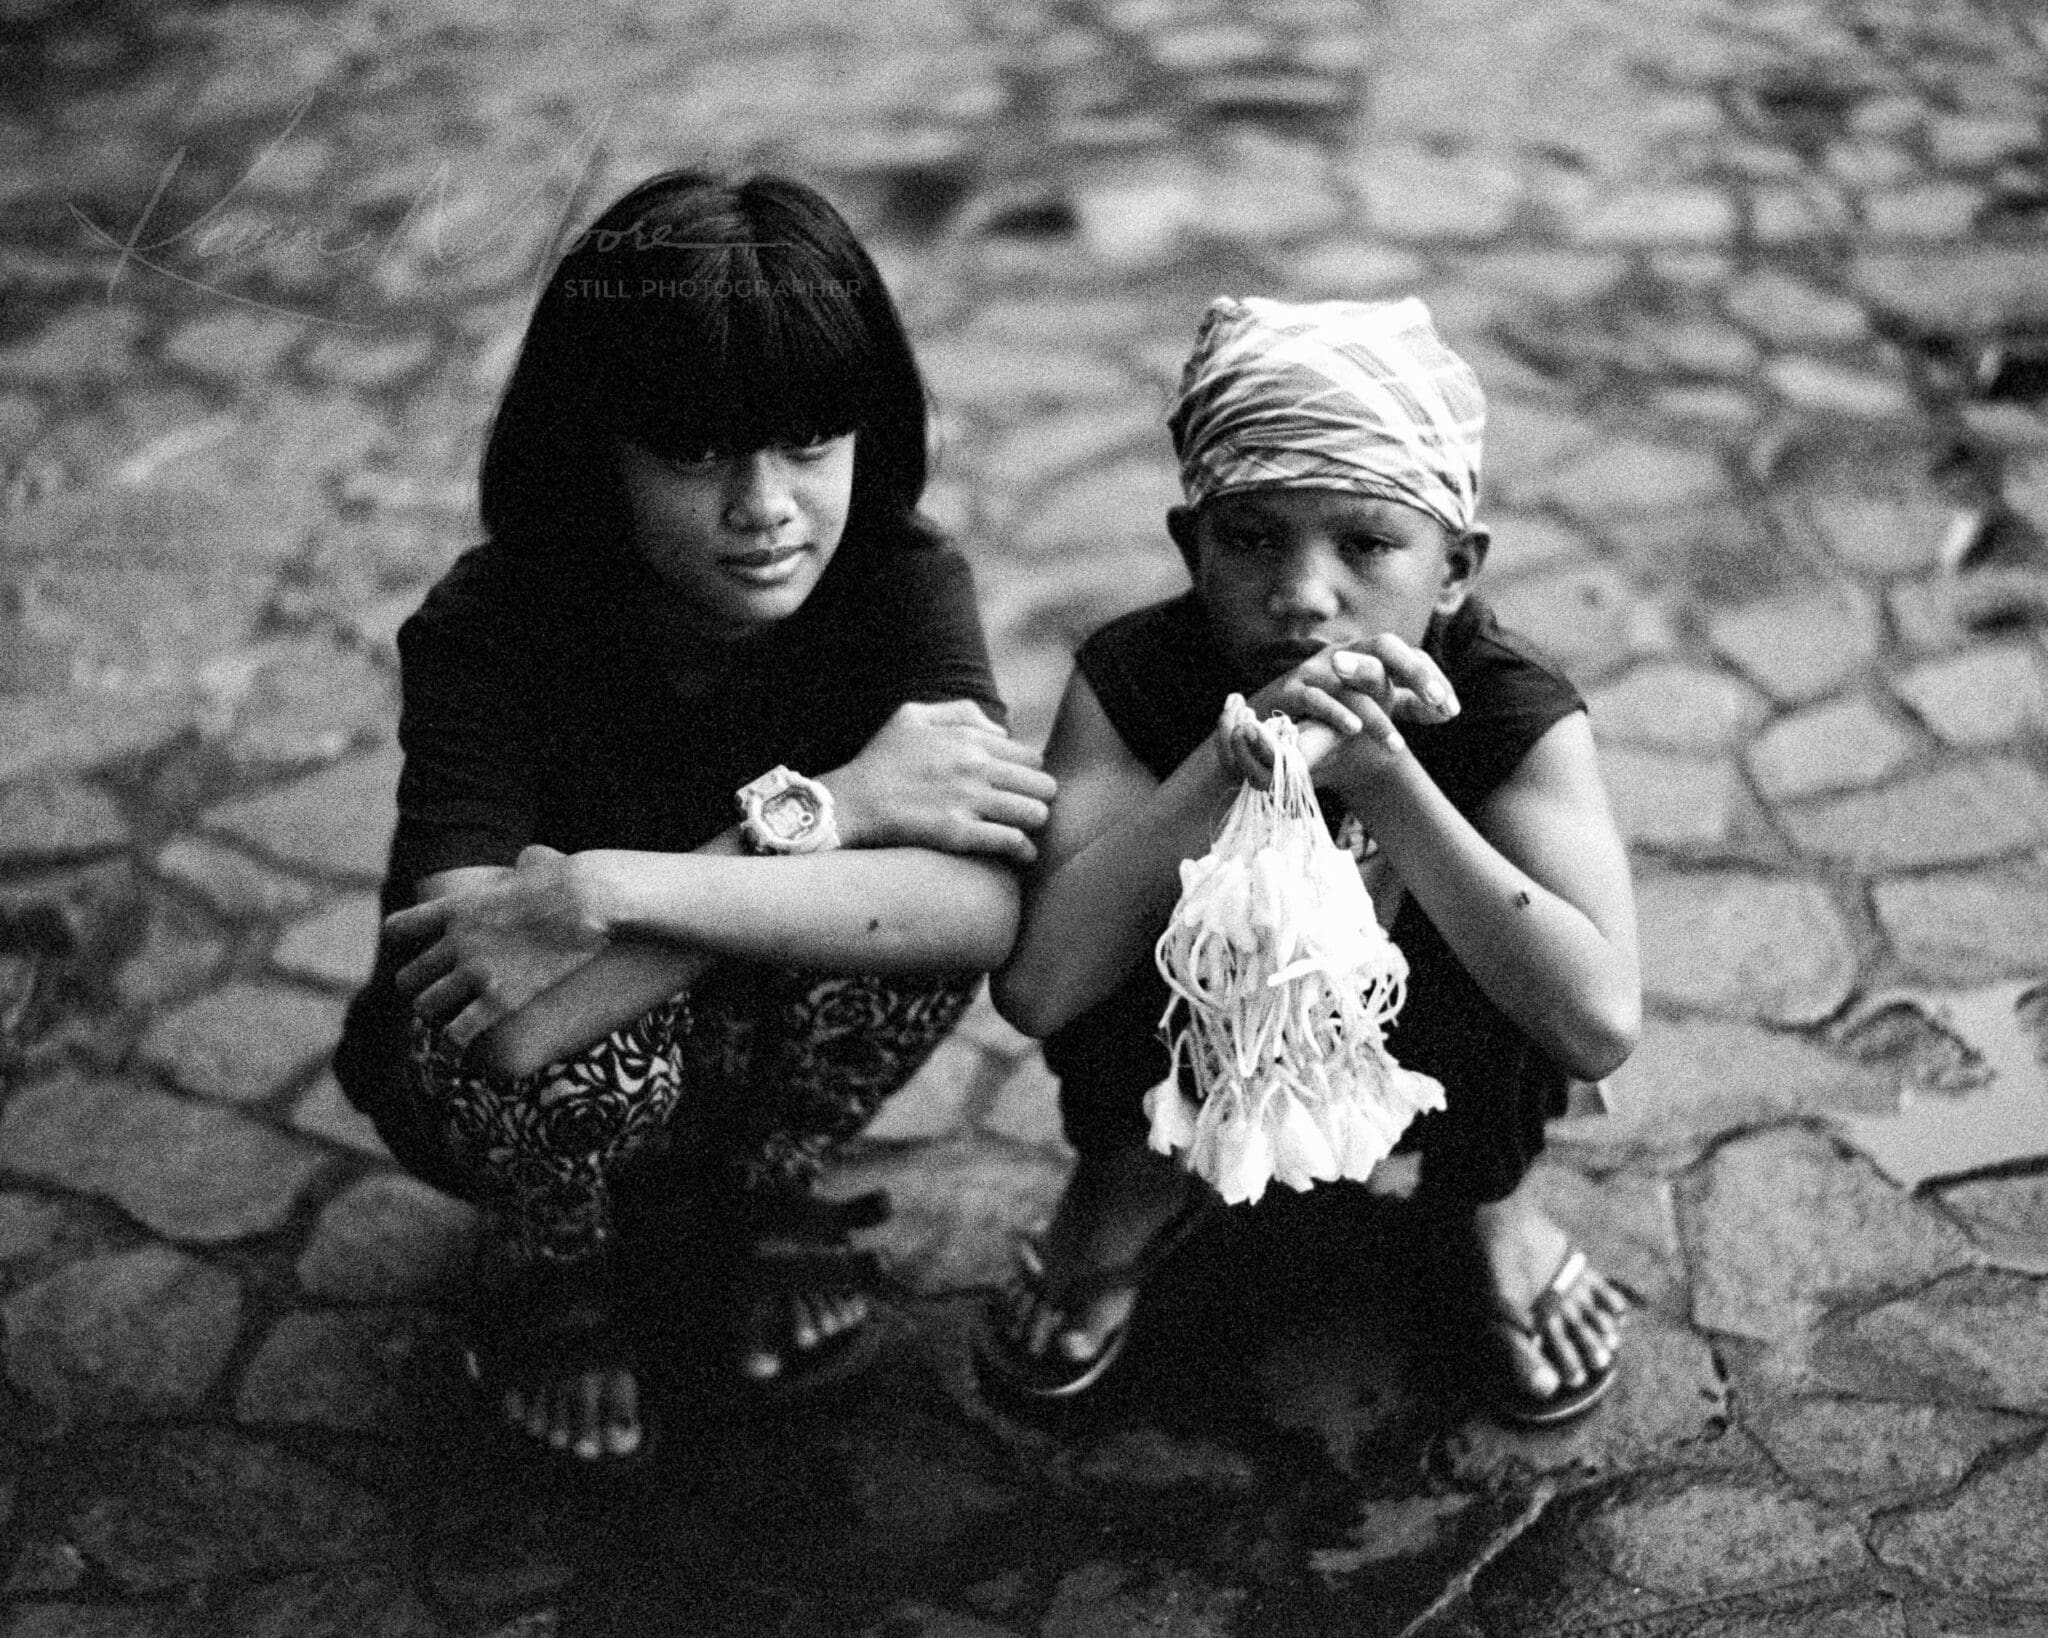 Filipino children selling Sampaguita flowers on cobblestone in moody black and white portrait